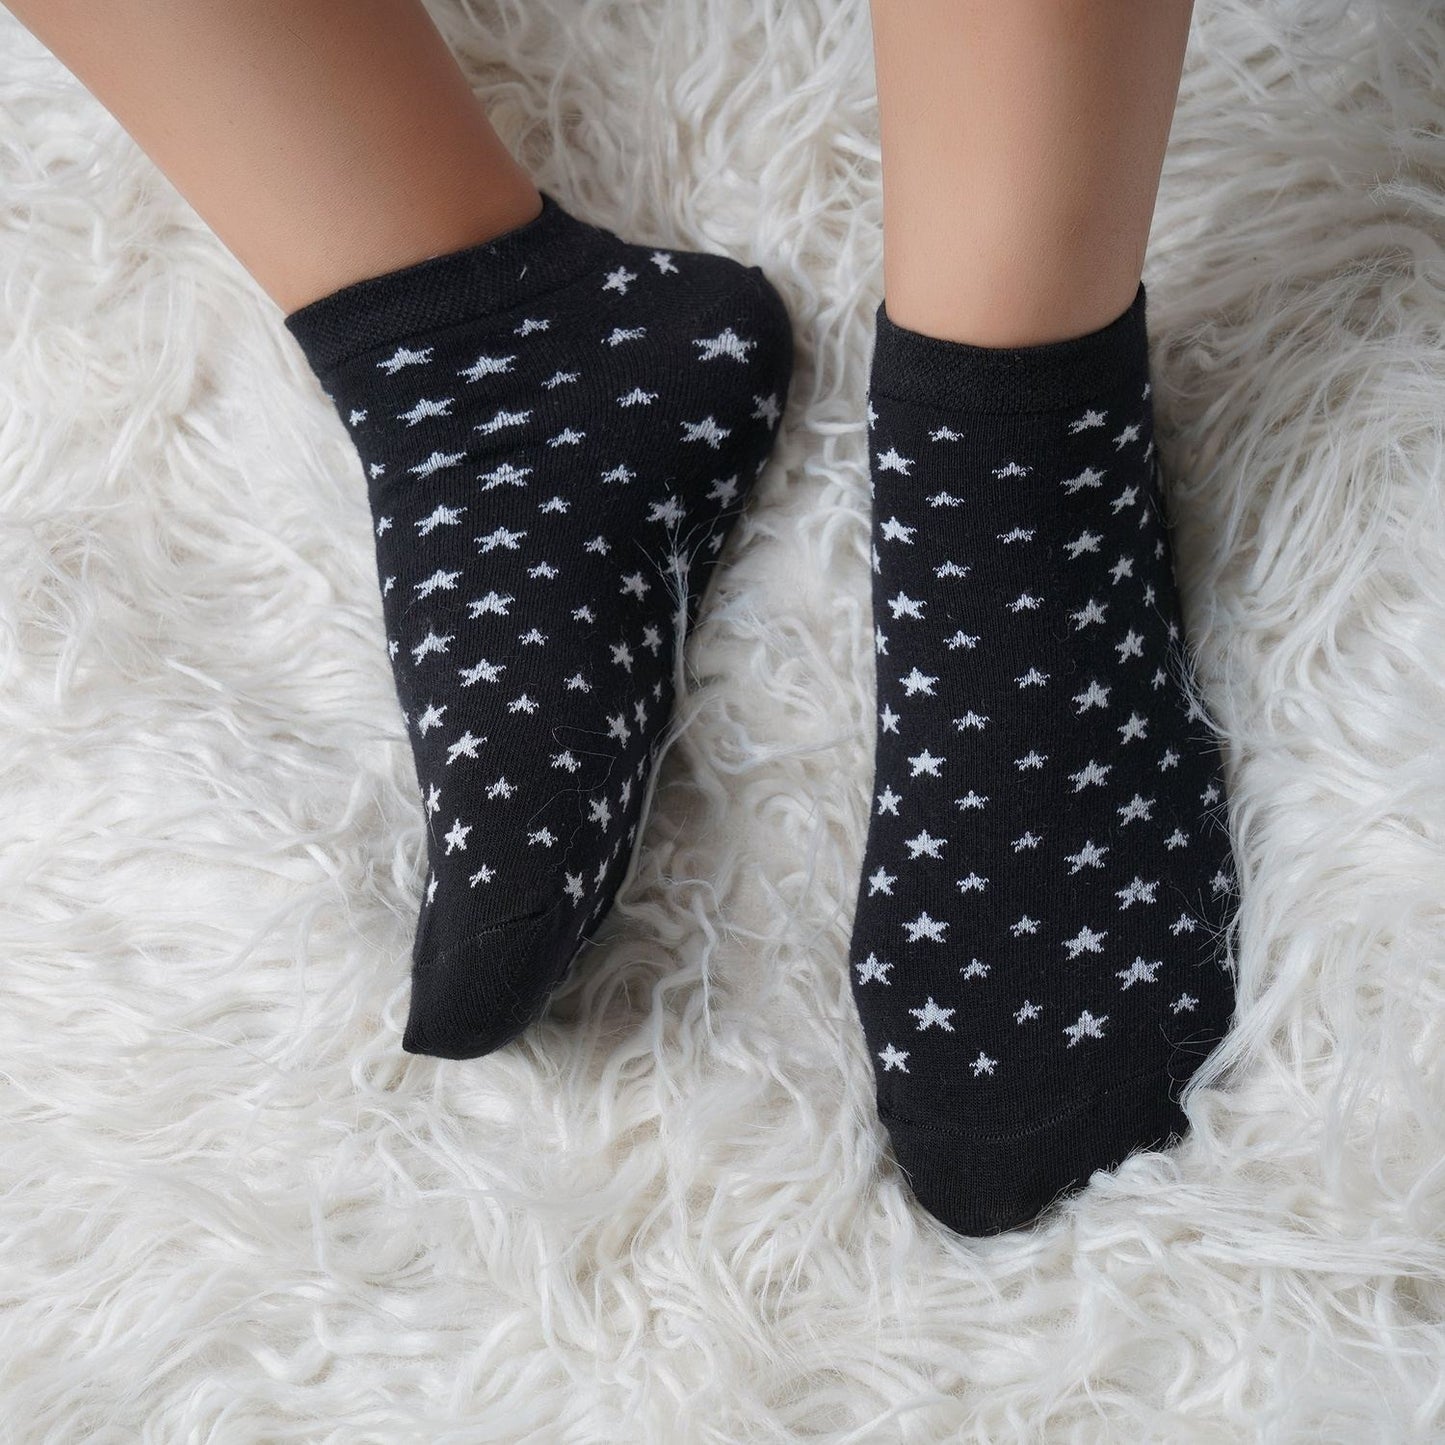 Low Ankle Star Pattern Cotton Socks (Black)